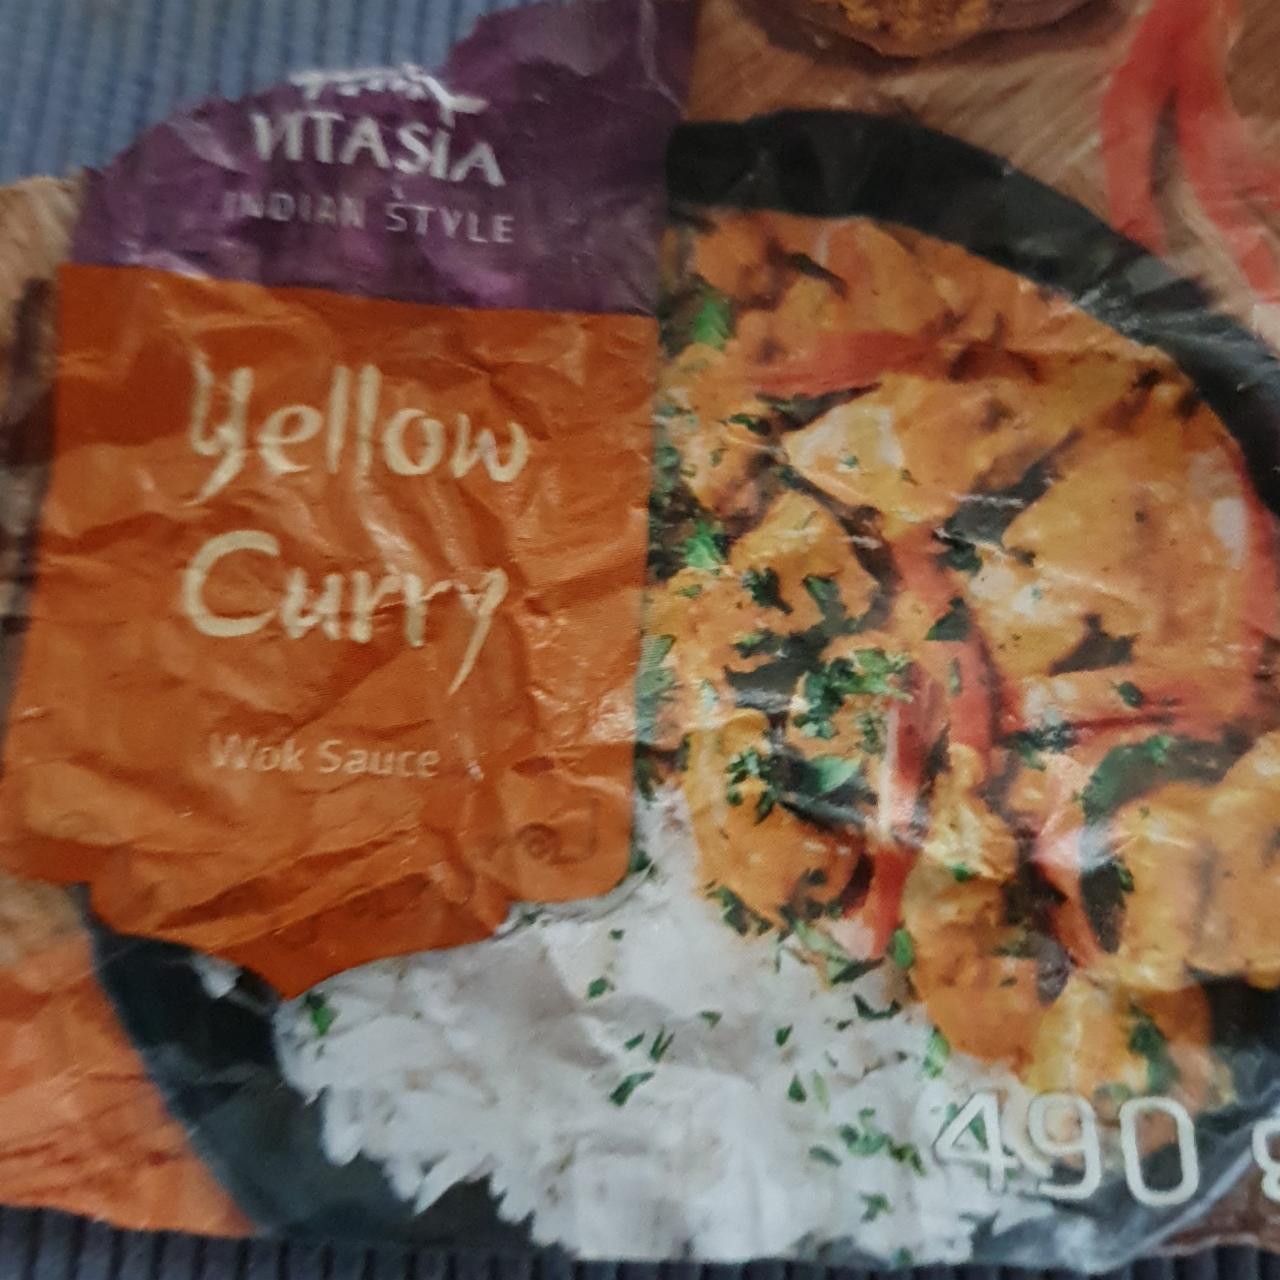 Fotografie - Yellow curry wok sauce Vitasia